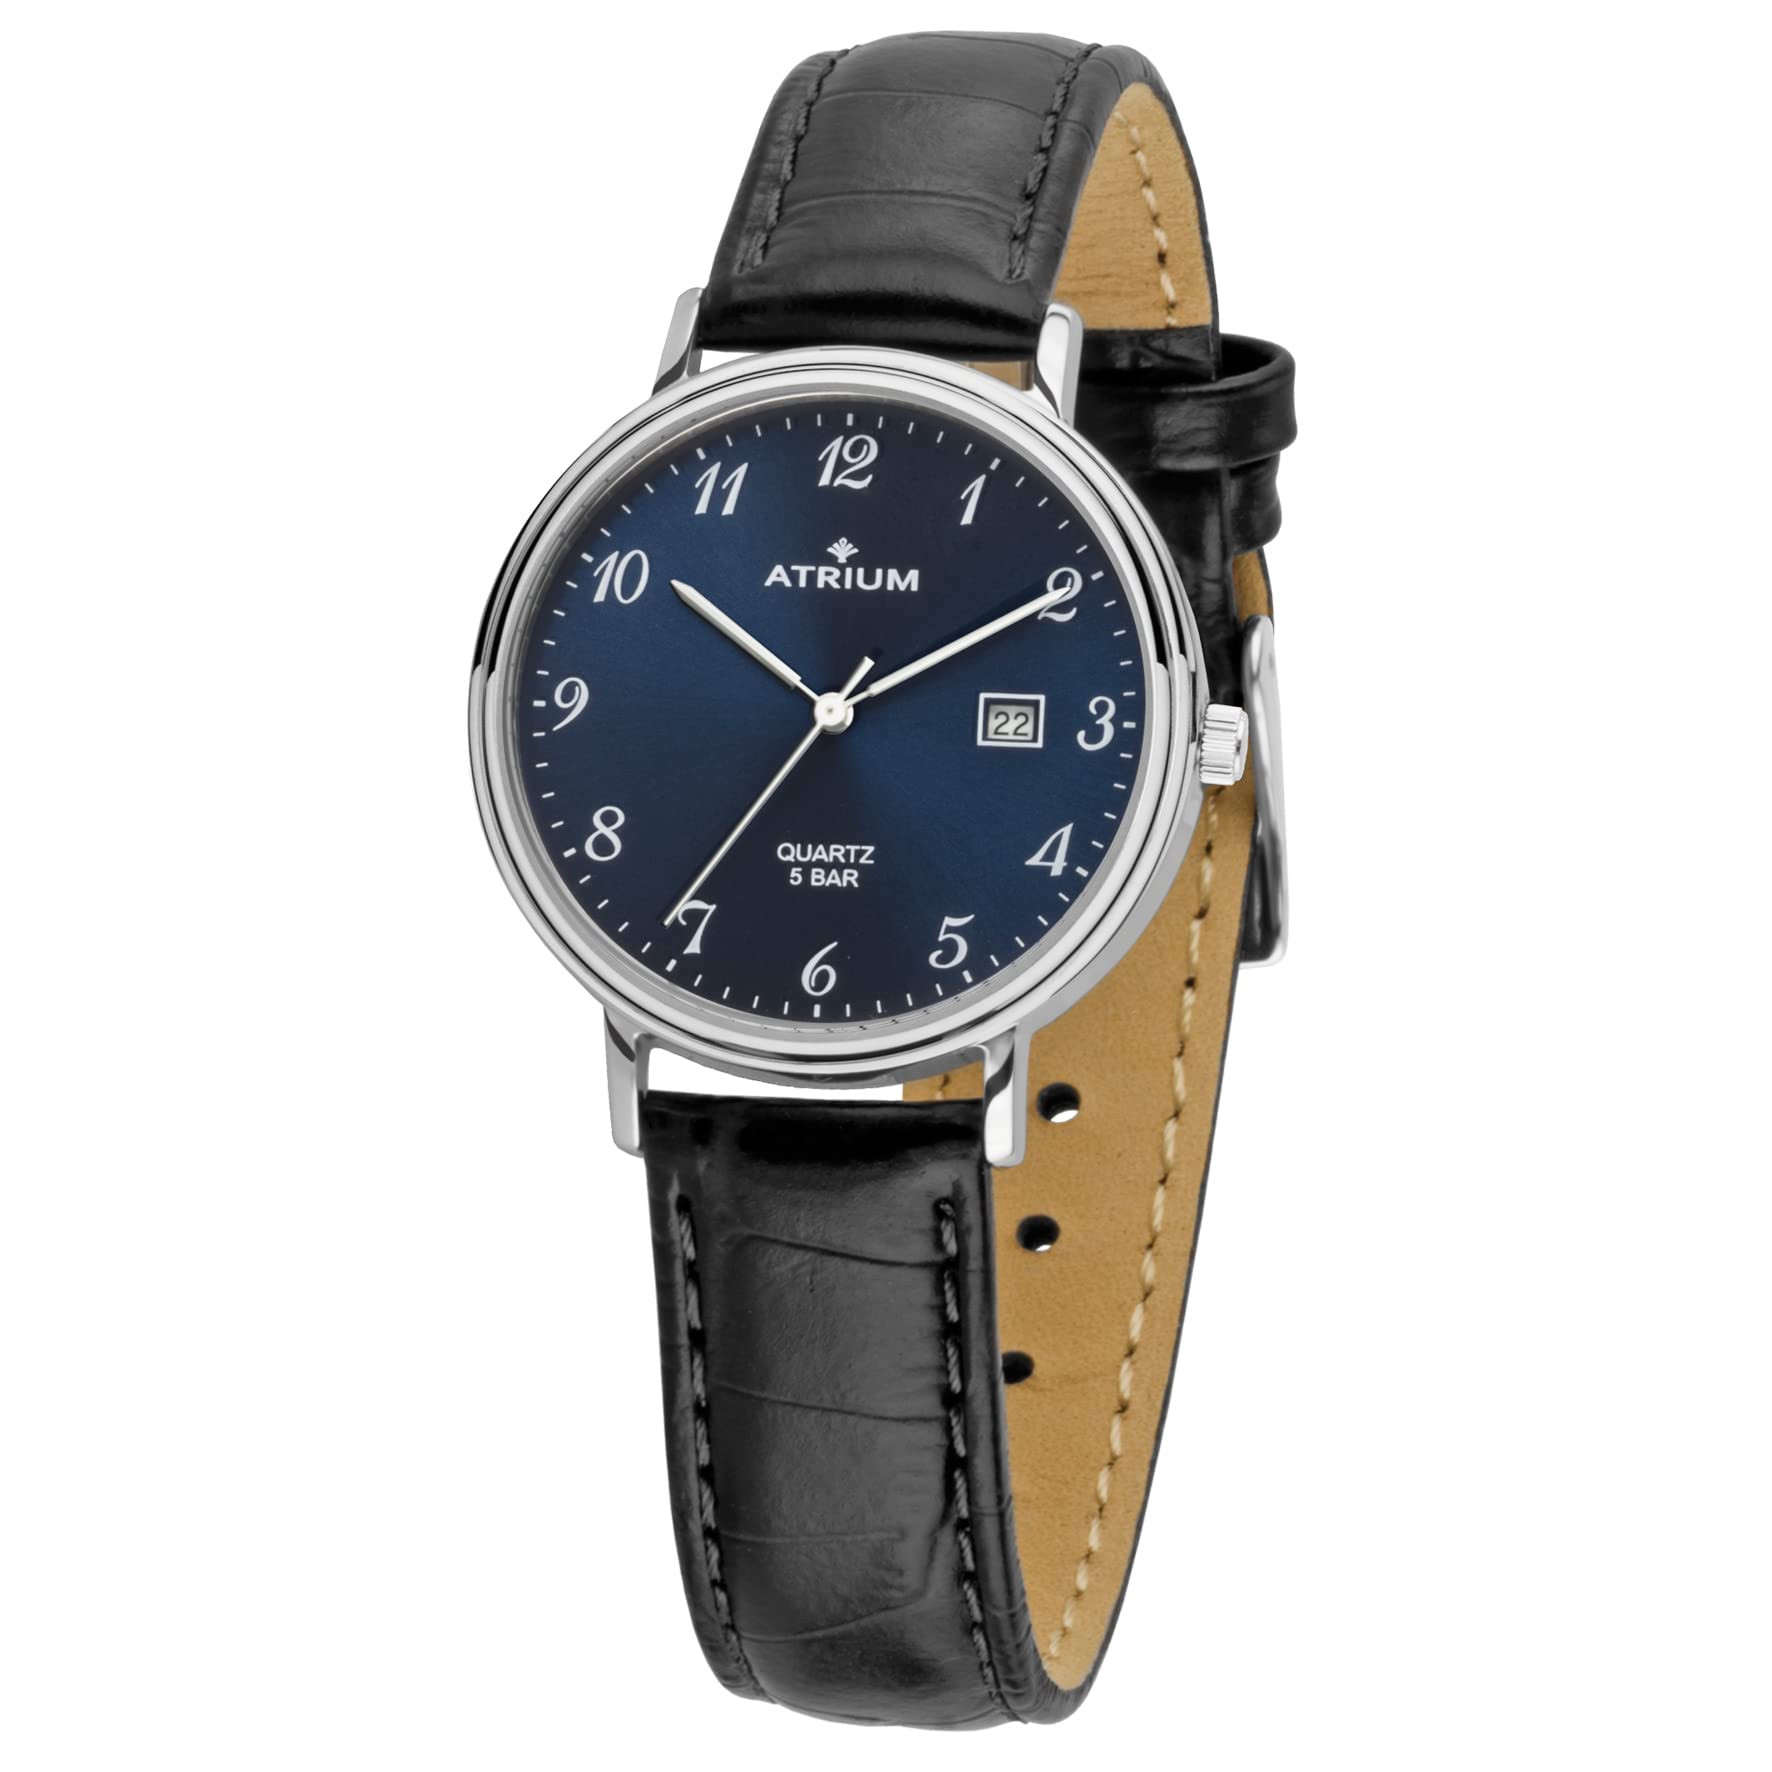 Atrium Damen-Armbanduhr Analog Quarz Edelstahl Datum Leder blaues Zifferblatt 5 bar A29-15